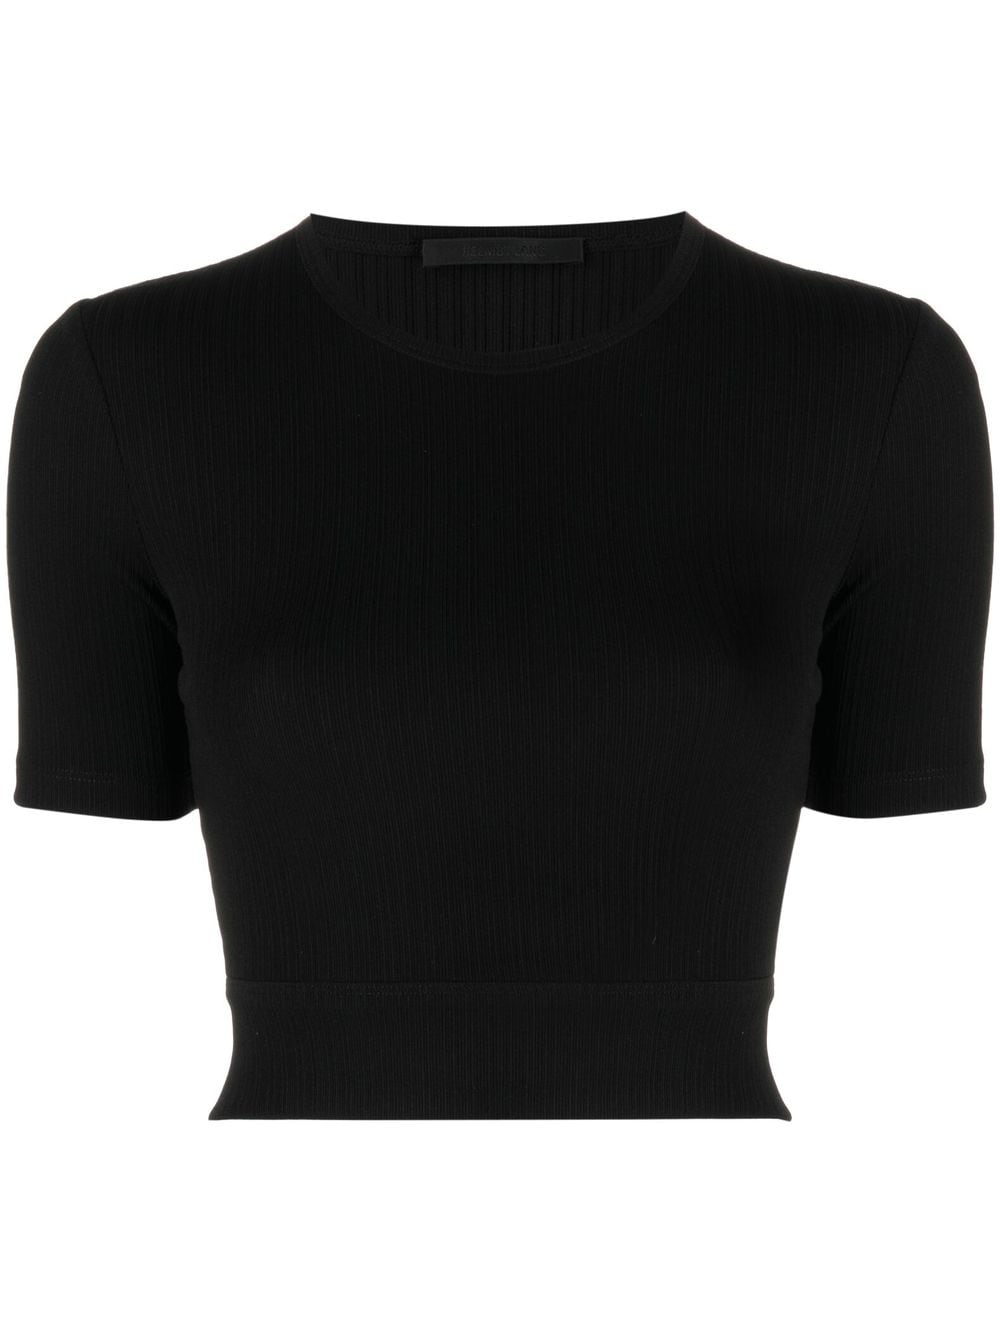 Helmut Lang Ribbed Cropped T-Shirt - Farfetch